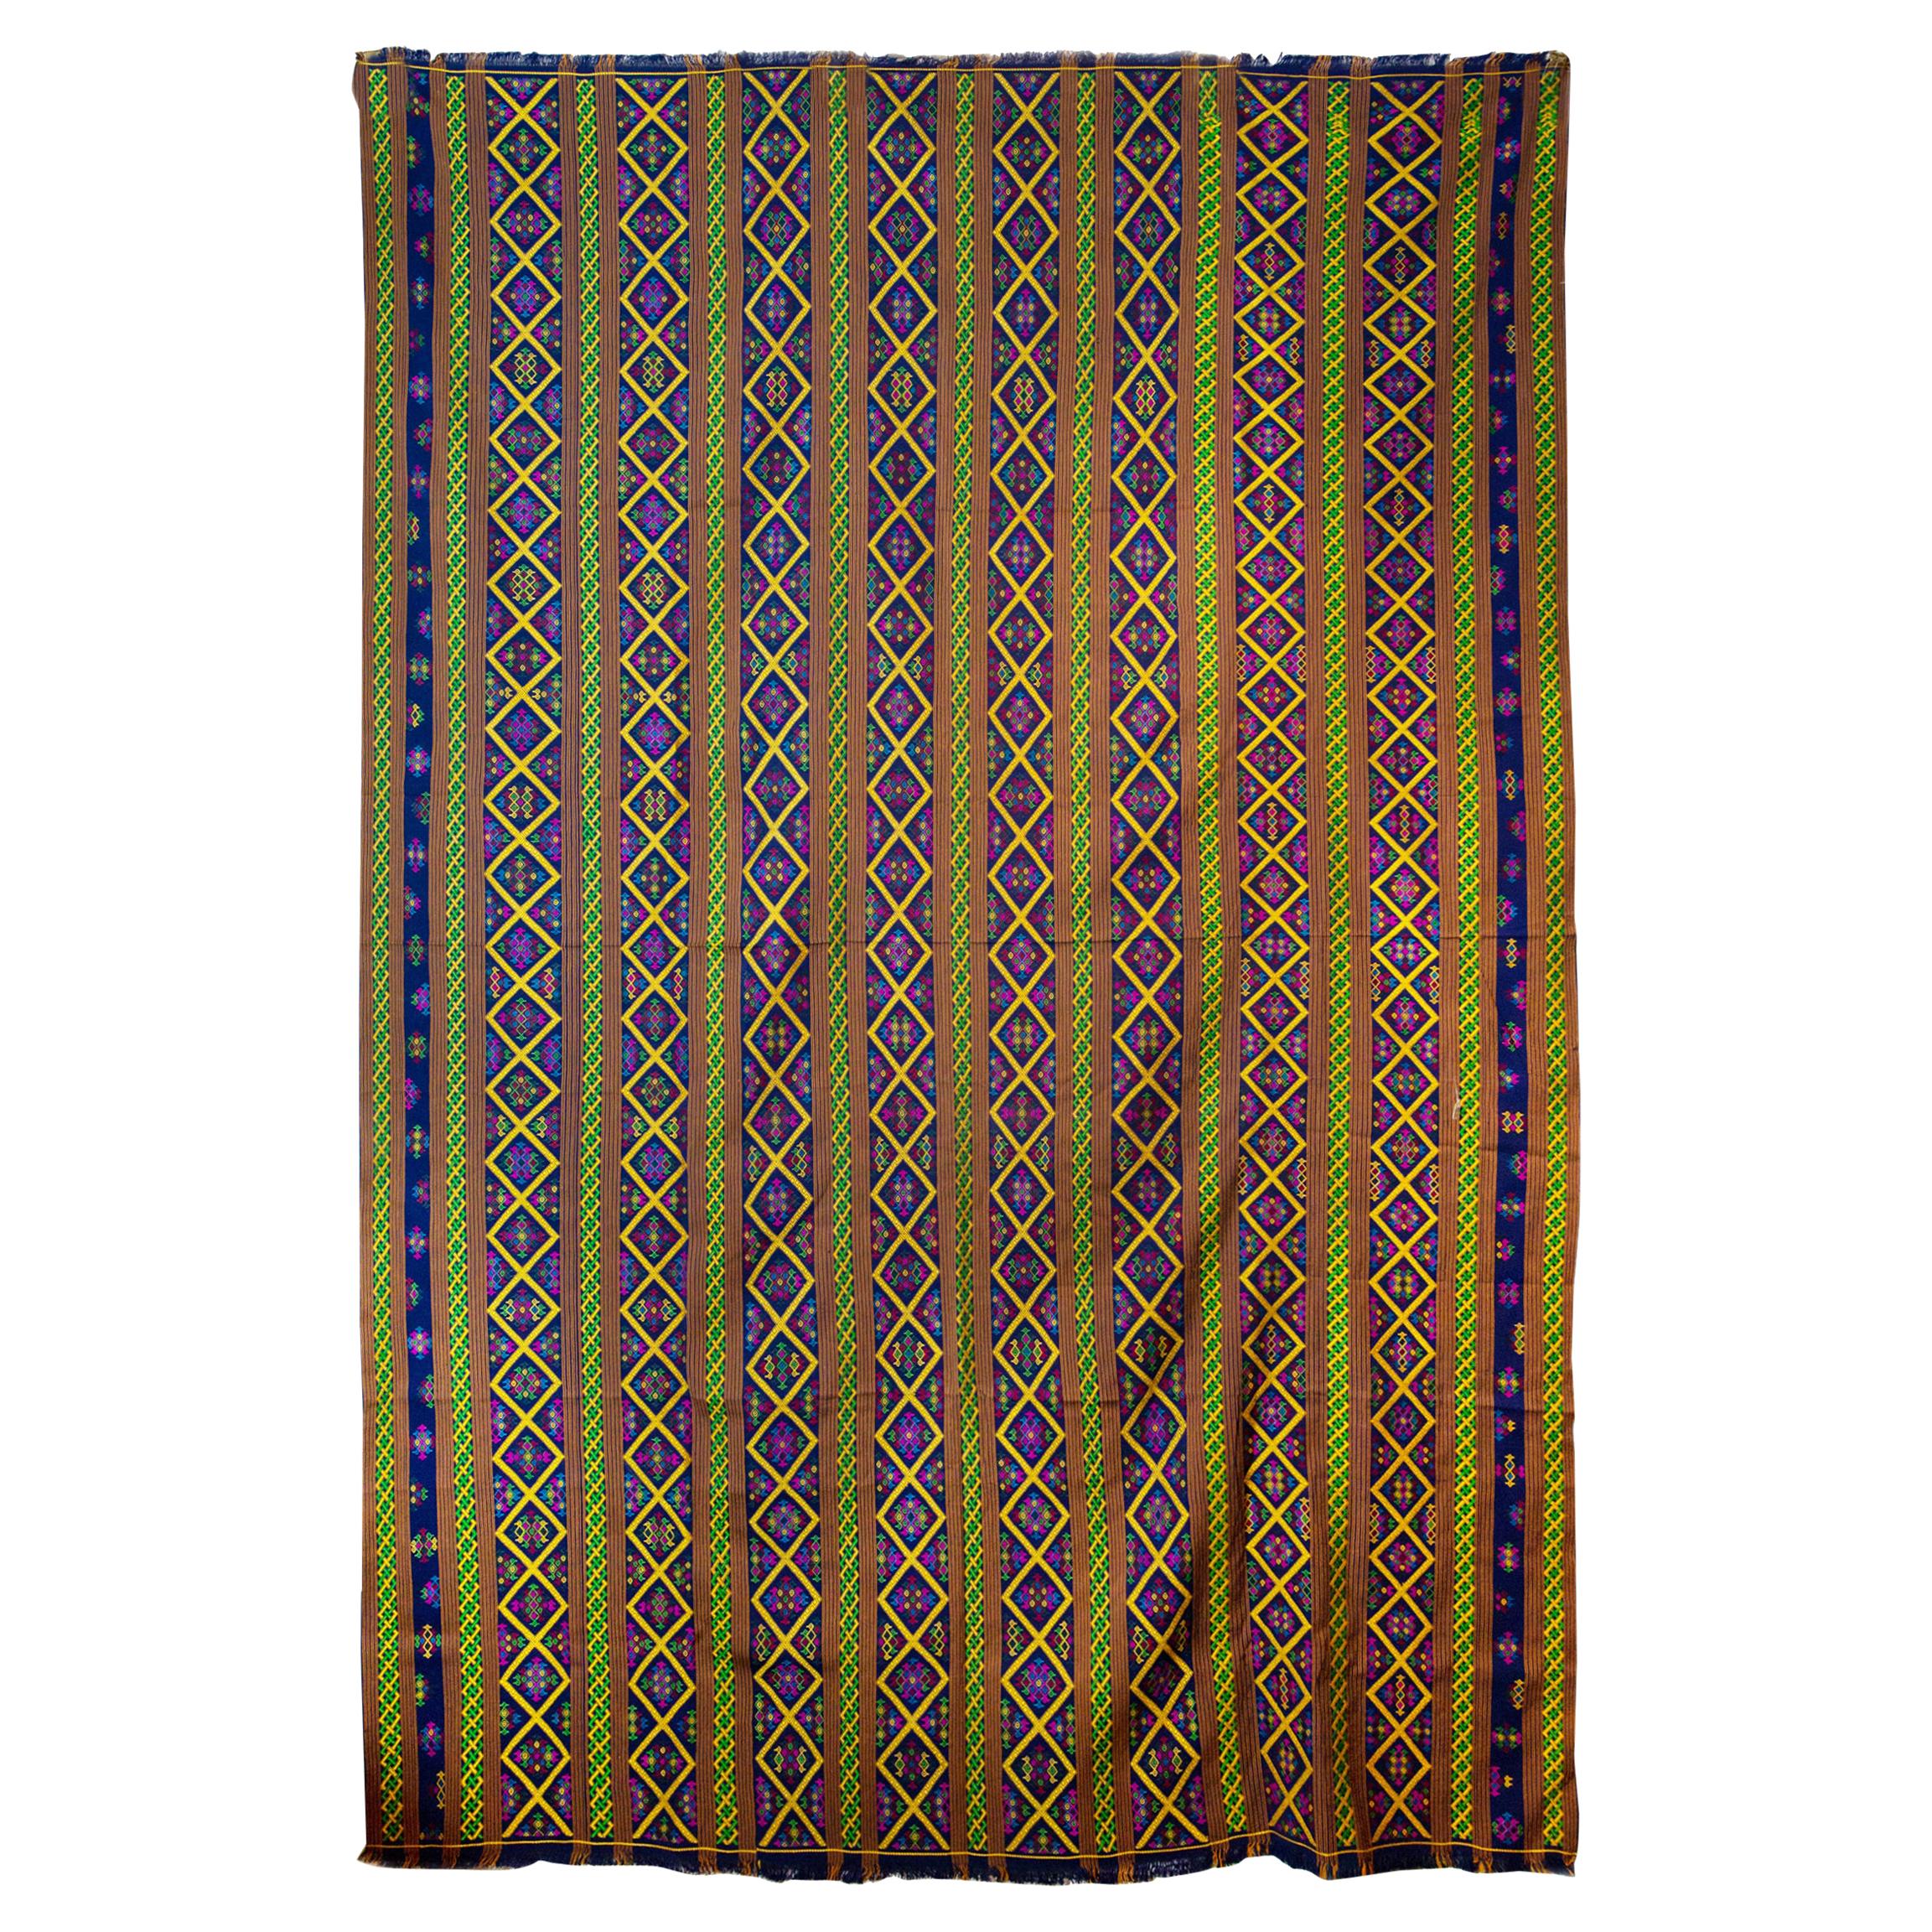 Bhutanese Silk Woven Kira Textile, Yellow, from the Royal Weavers of Bhutan